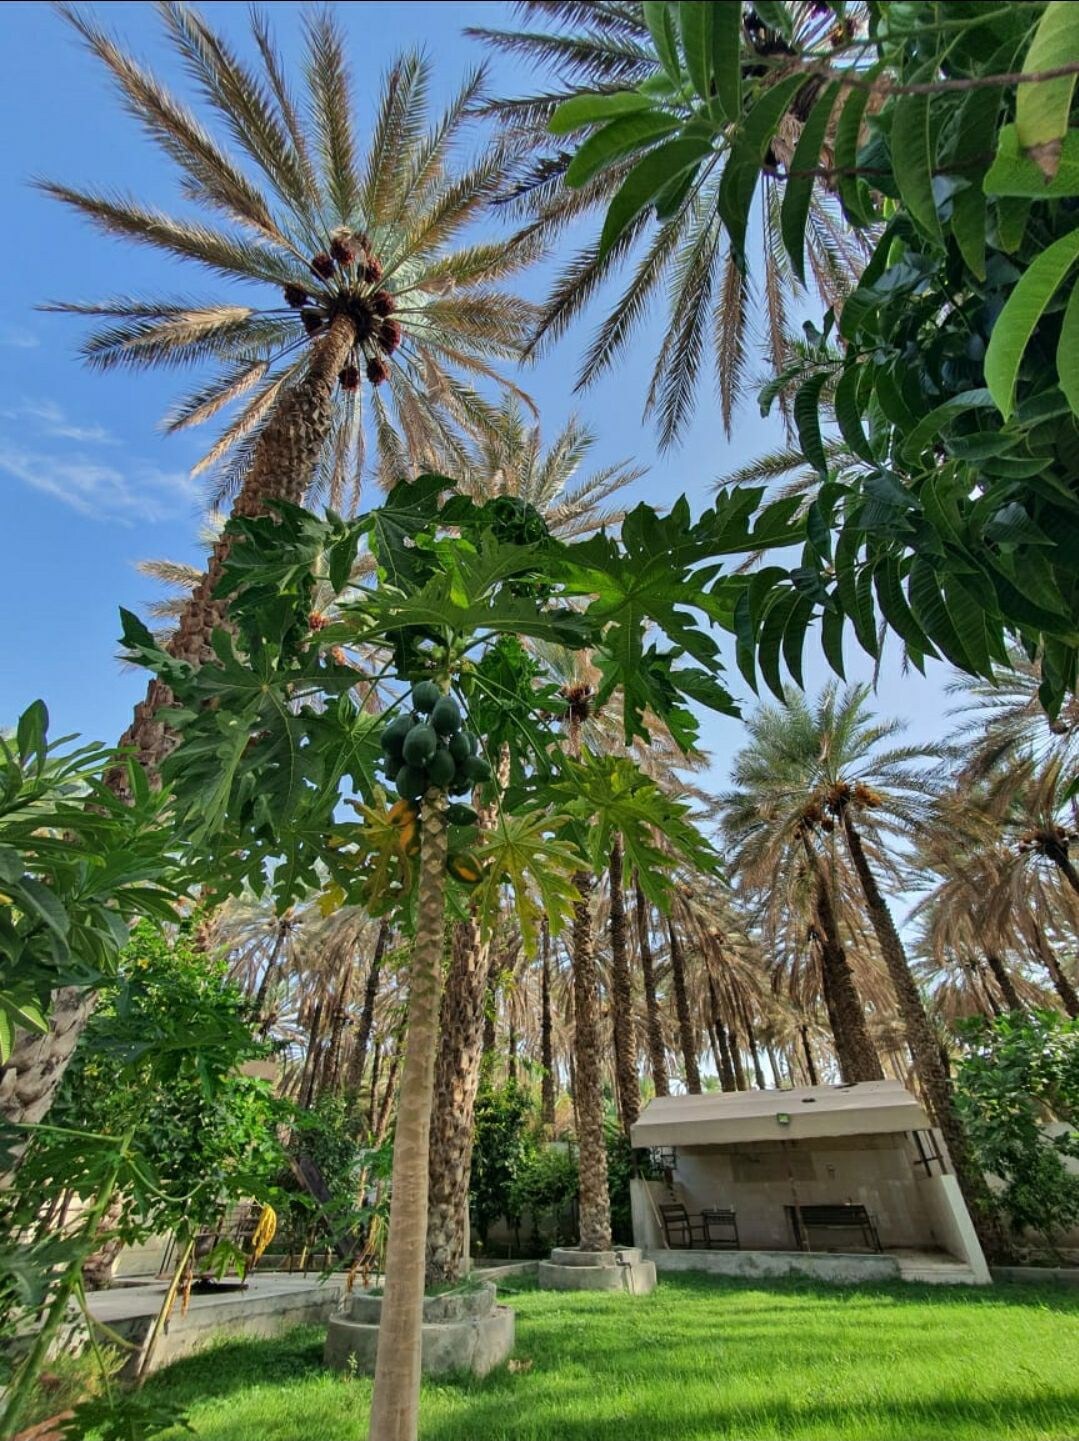 "Charming farm amid palm trees: a serene retreat."